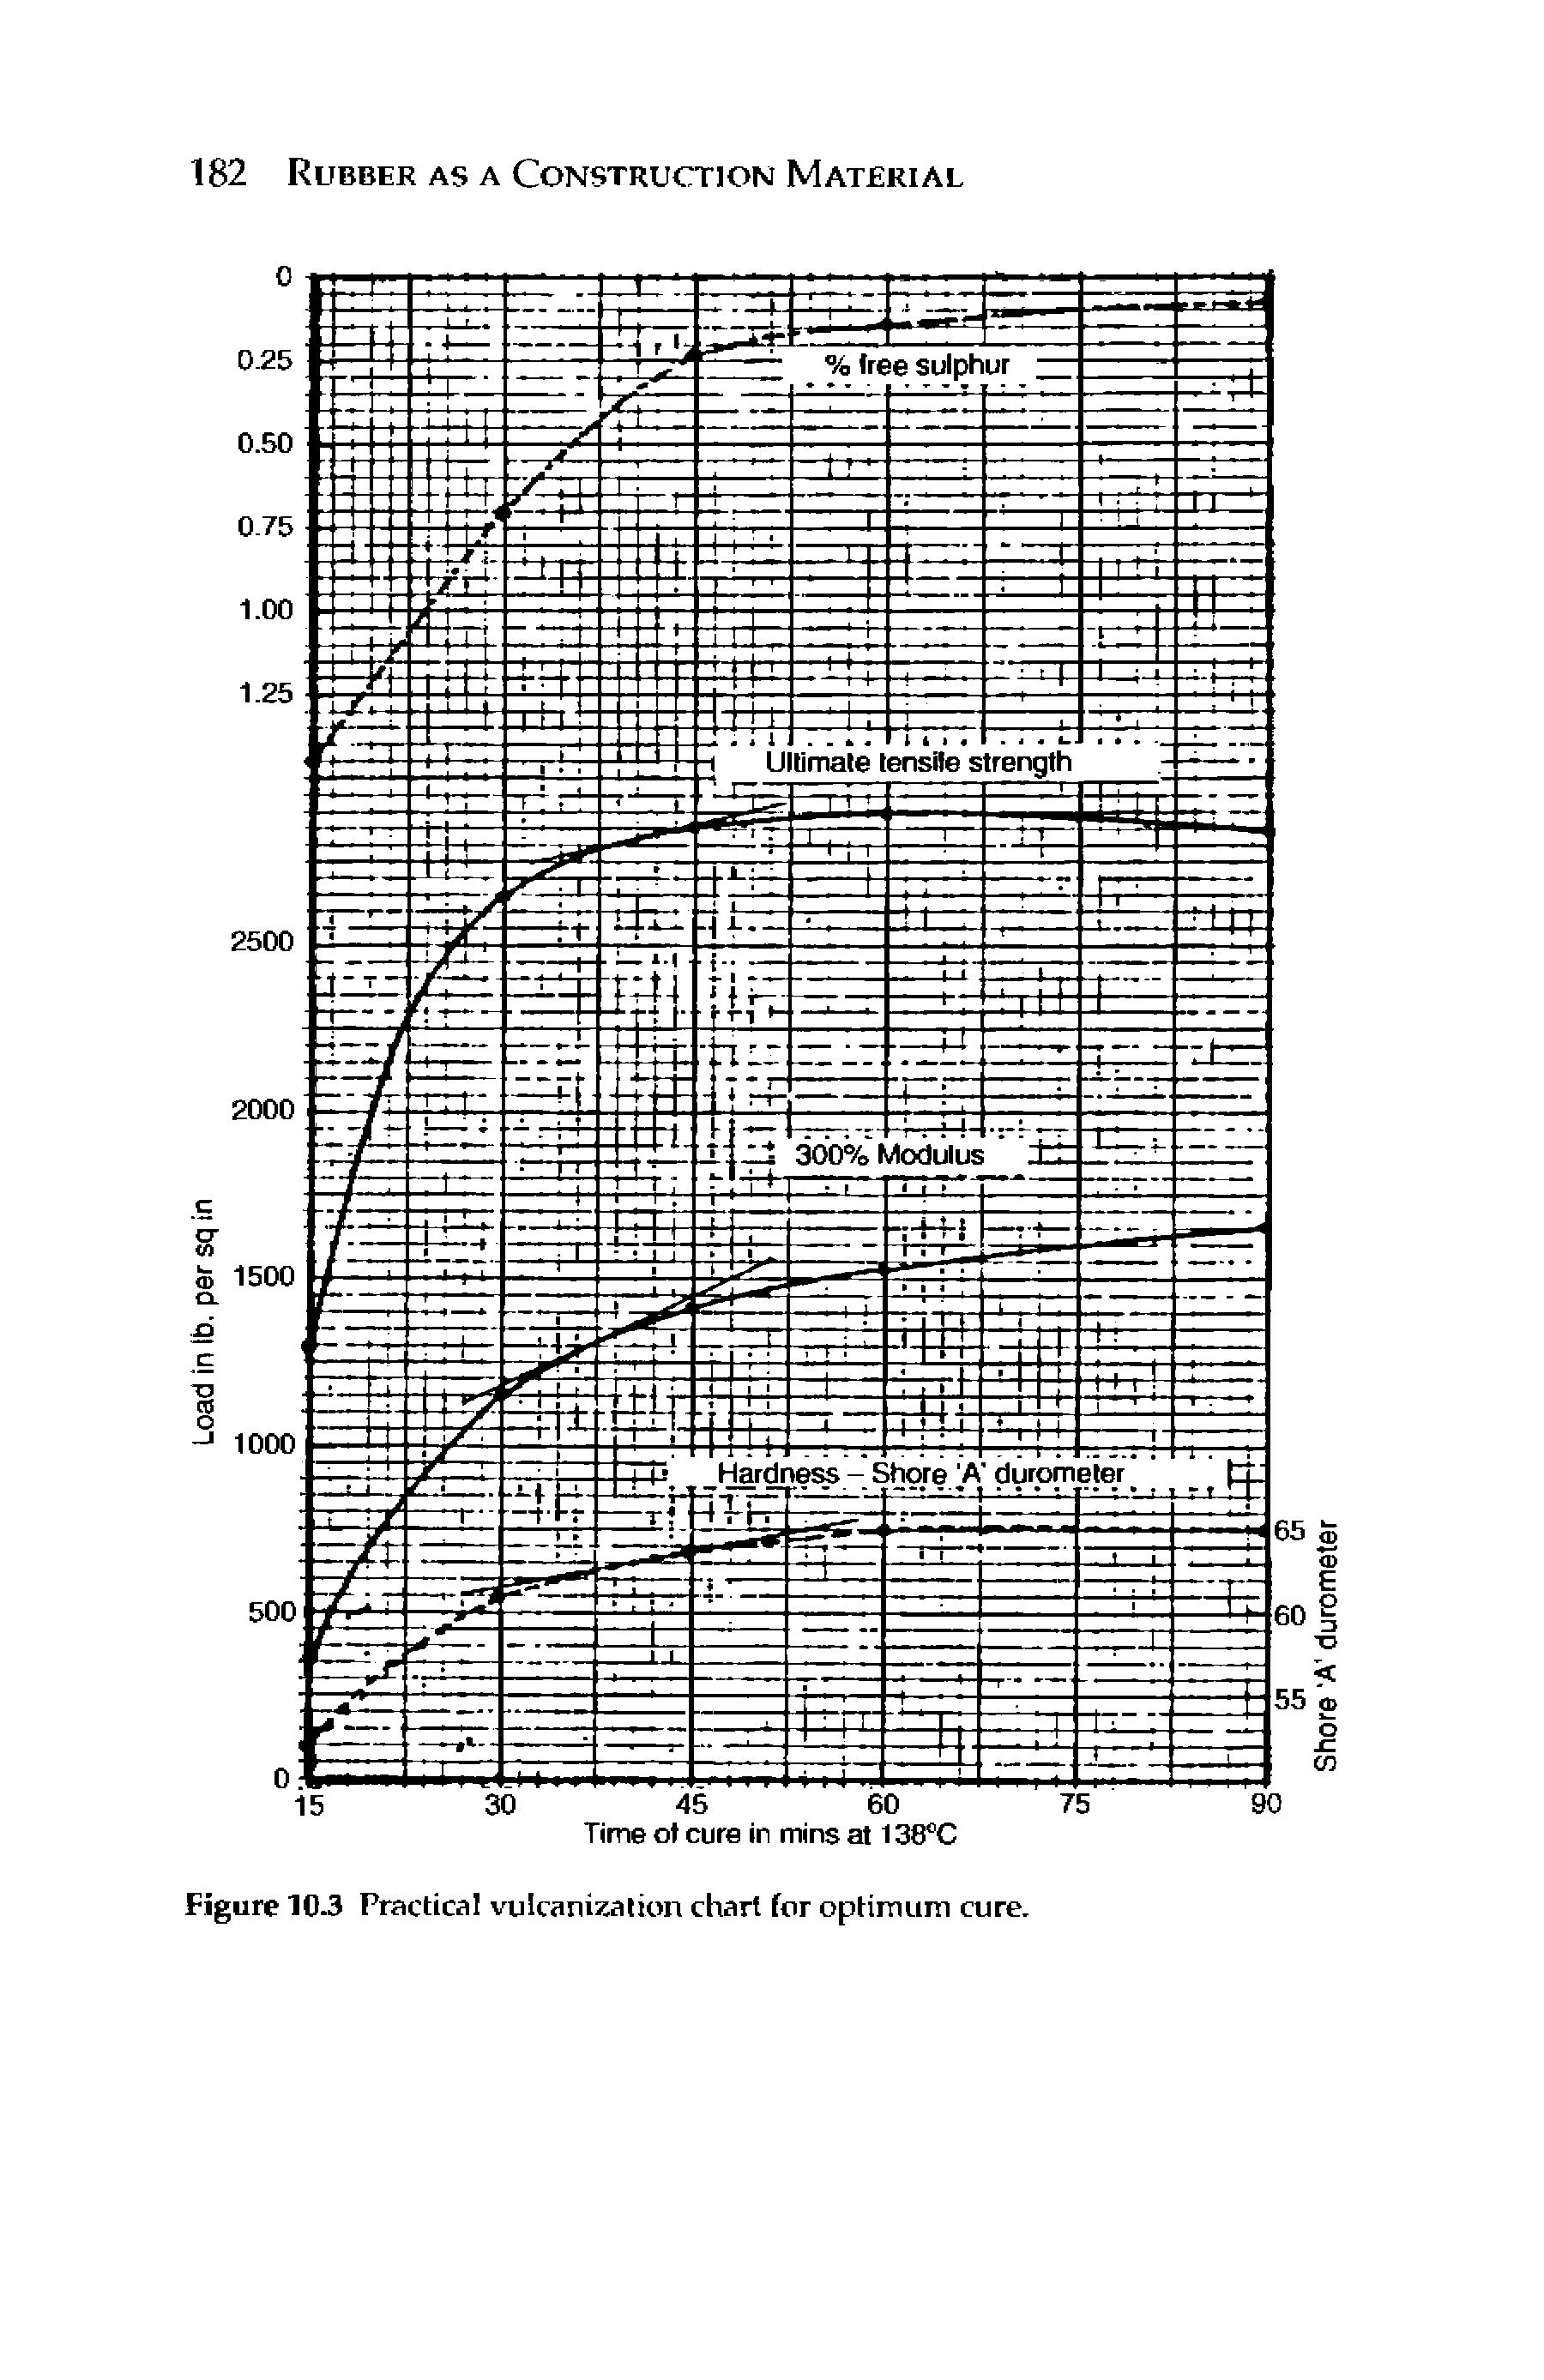 Figure 10.3 Practical vulcanization chart for optimum cure.